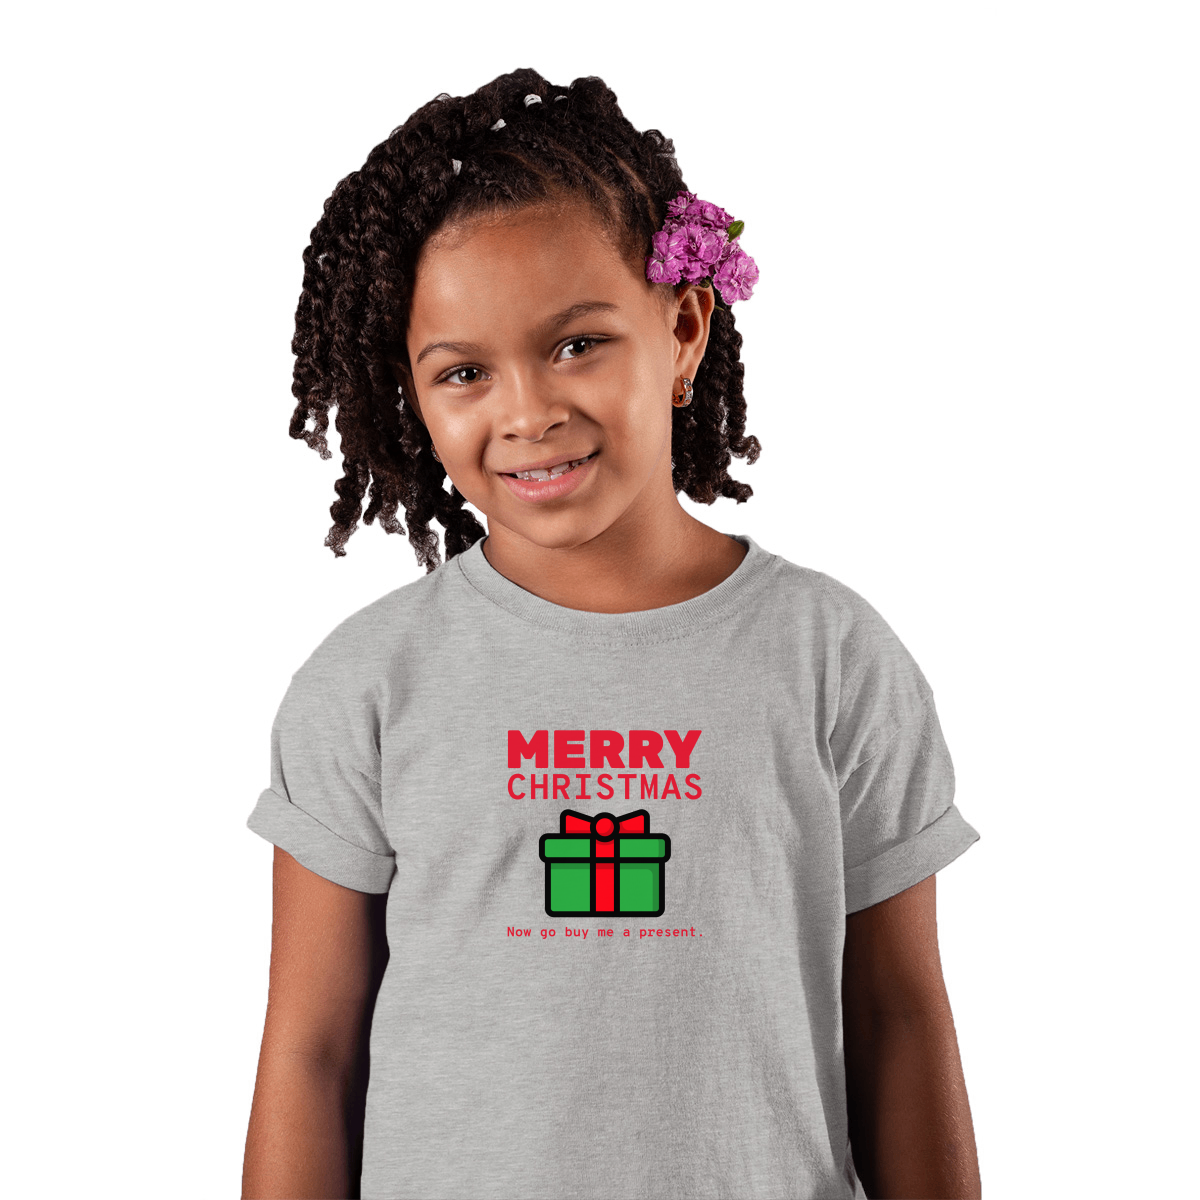 Merry Christmas Now Go Buy Me a Present Kids T-shirt | Gray